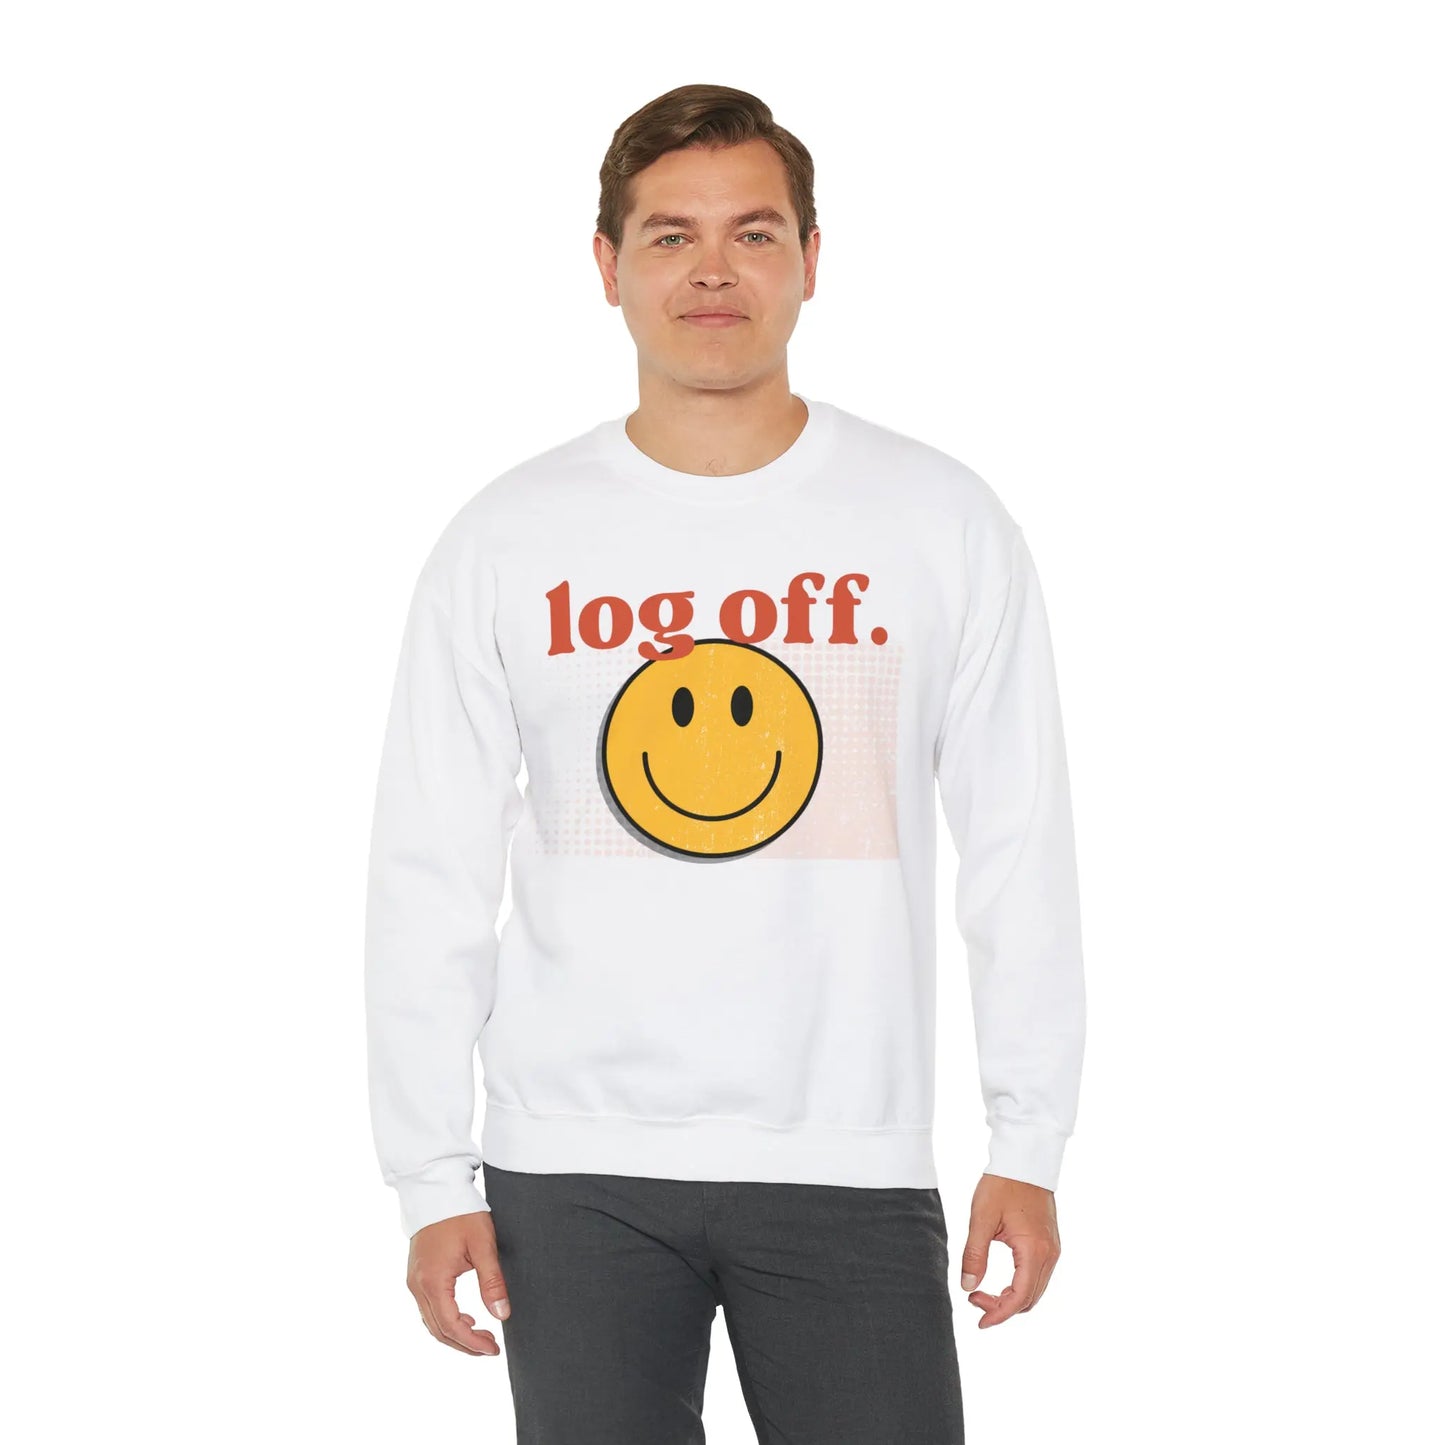 Stay Present with Retro 'Log Off' Smiley Face Sweatshirt - papercraneco